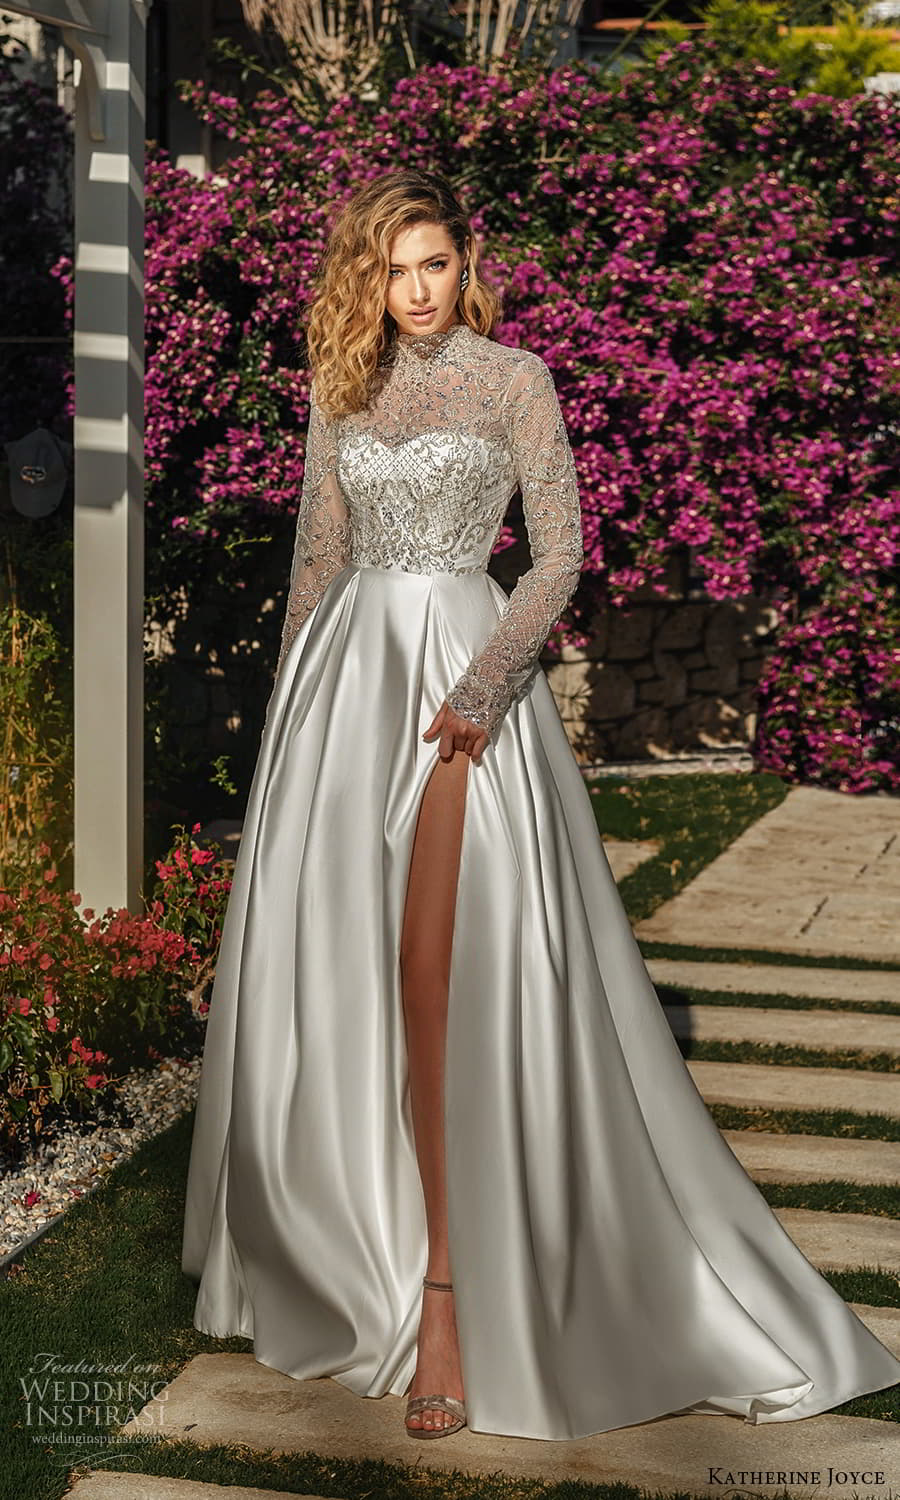 katherine joyce 2022 bridal sheer long sleeve jewel neckline heavily embellished bodice a line ball gown wedding dress clean slirt skirt (1) mv